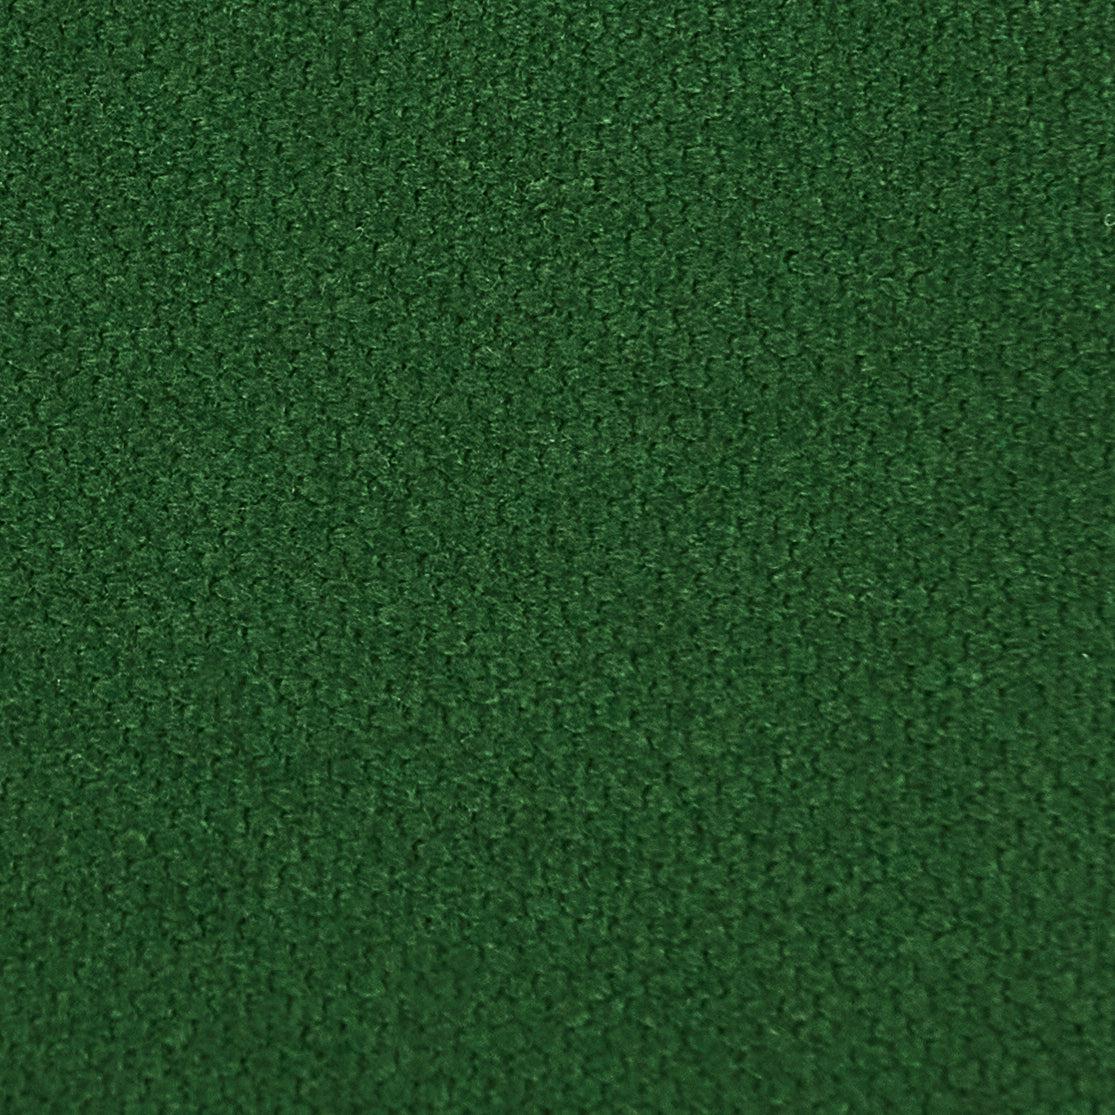 Erewhon Bag Green Fabric Details